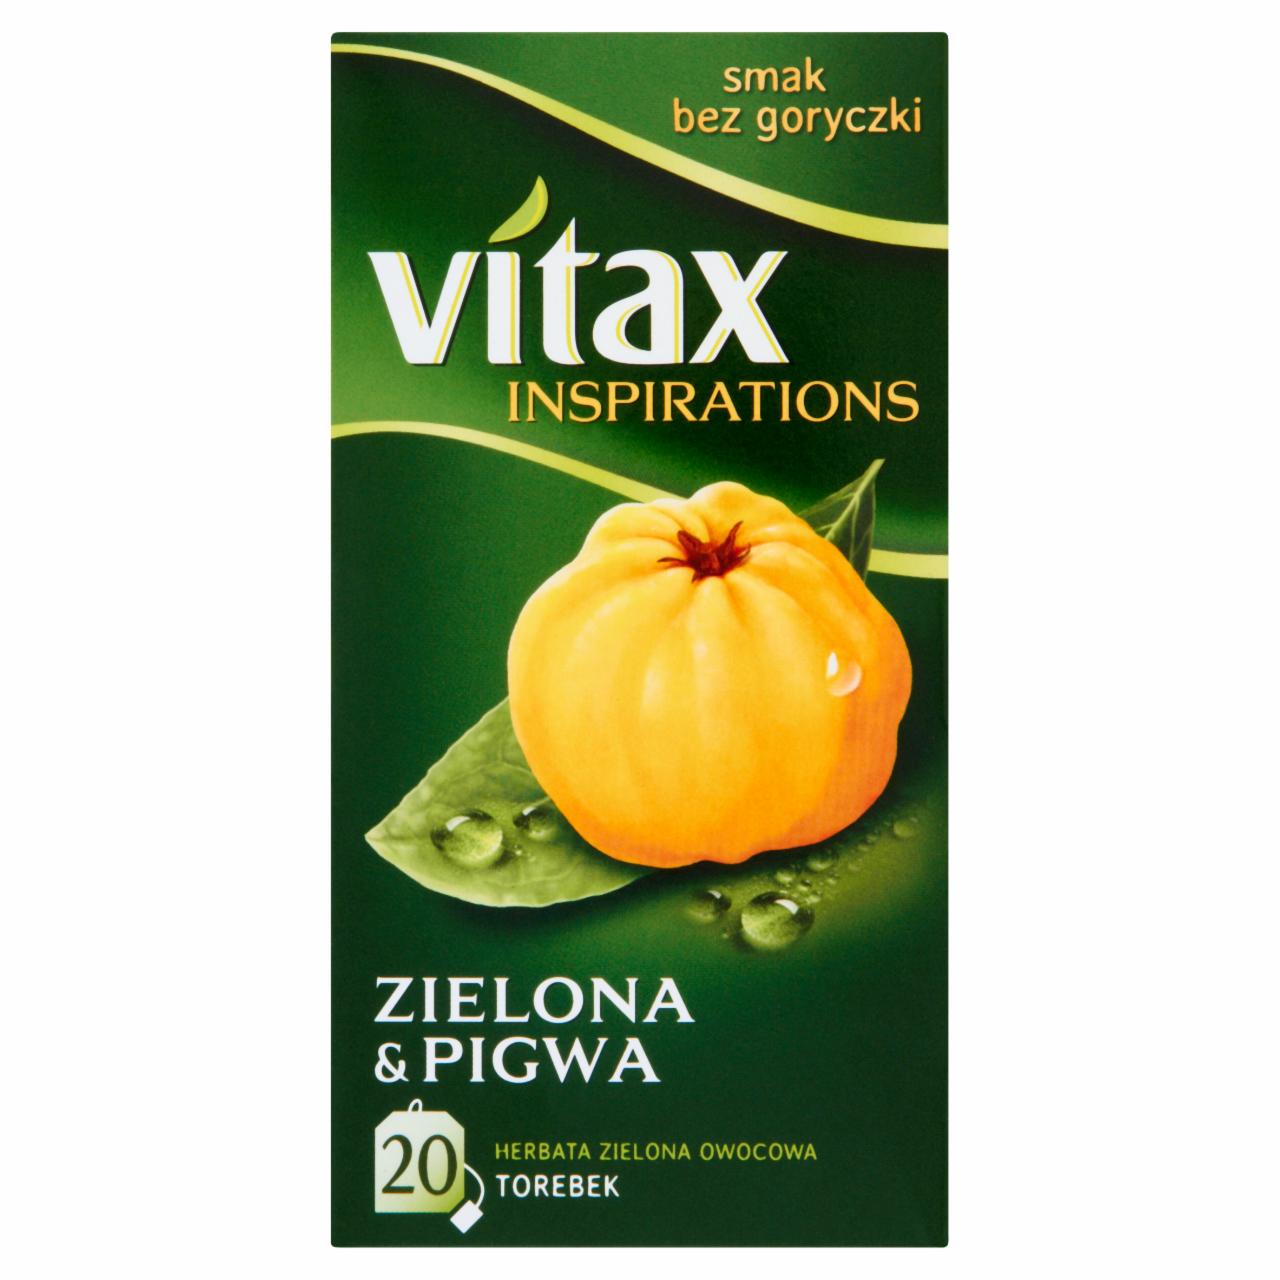 Zdjęcia - Vitax Inspirations Zielona and Pigwa Herbata zielona owocowa 30 g (20 torebek)